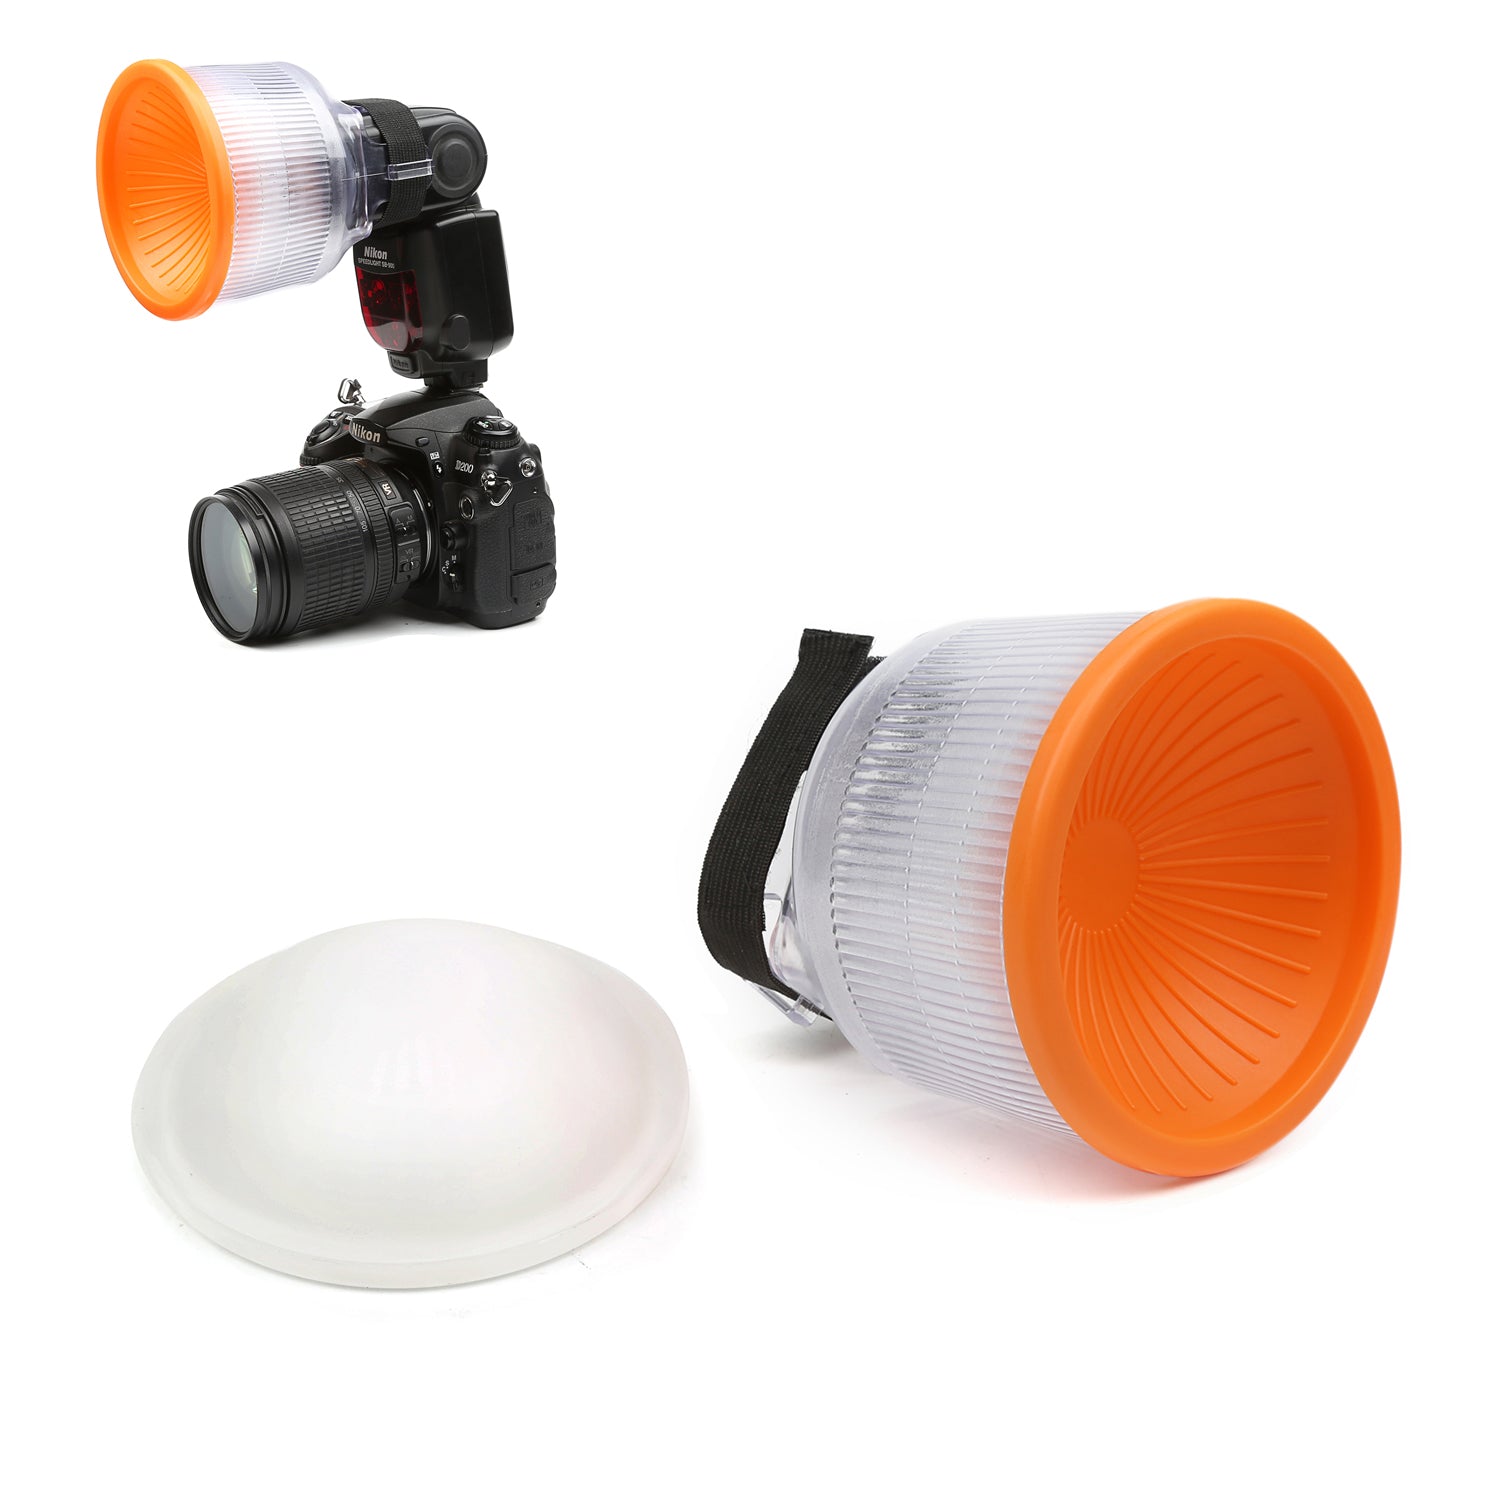 Universal Bowl Light Compatible Diffuse Diffuser Bowl Flash Cover Set Orange SLR Accessories Parts for Canon Nikon Sony